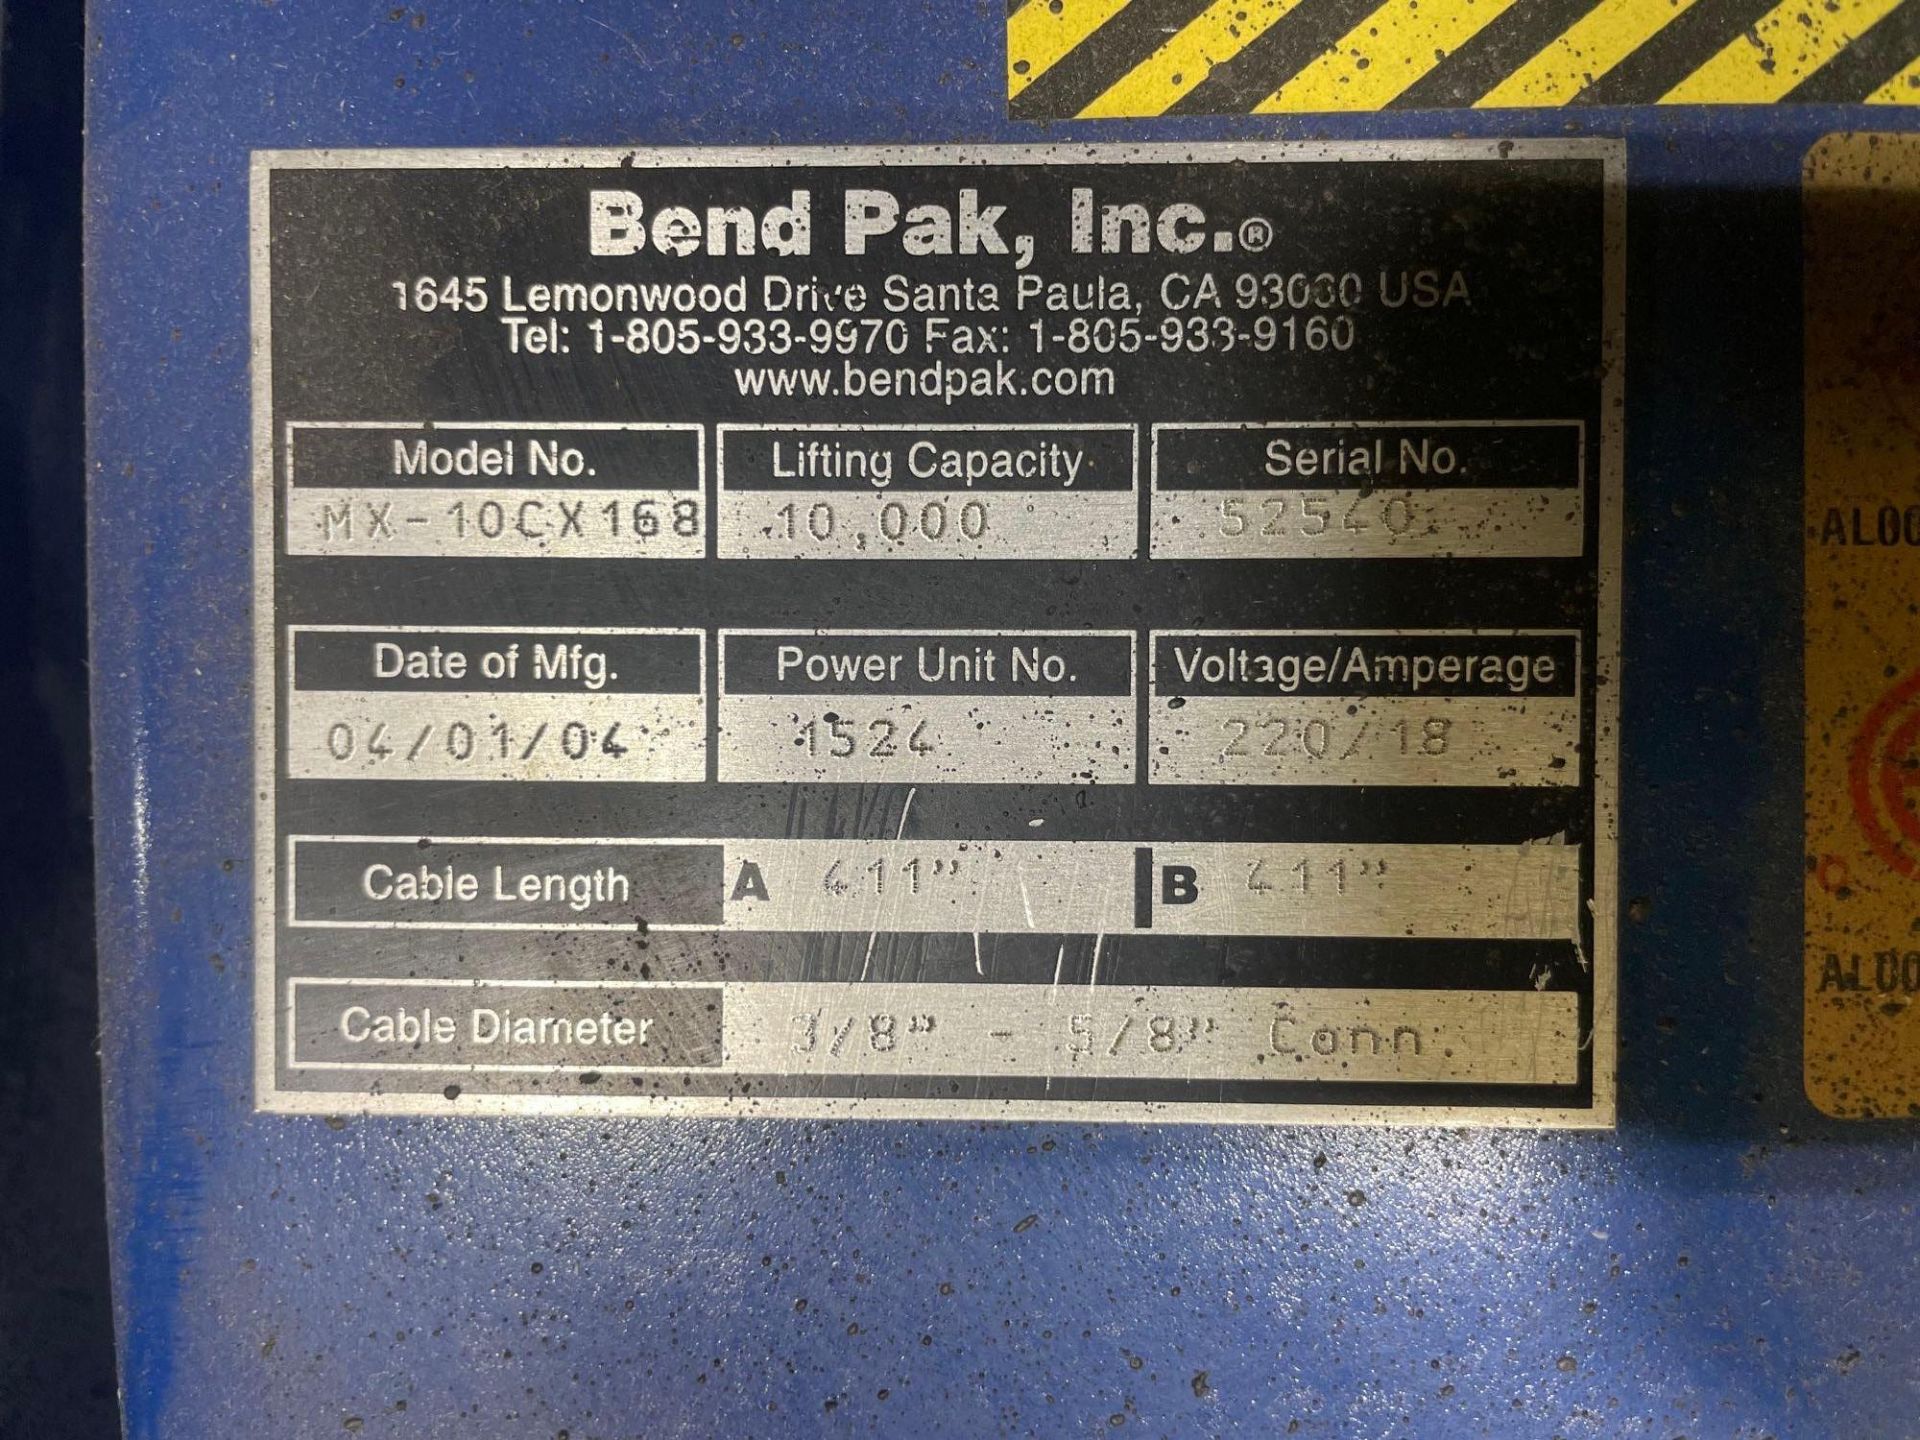 Bend Pak MX-10CX168 2 Post Hydraulic Car Lift, 10K Lbs. Cap., s/n 52540, New 2004 - Image 7 of 7